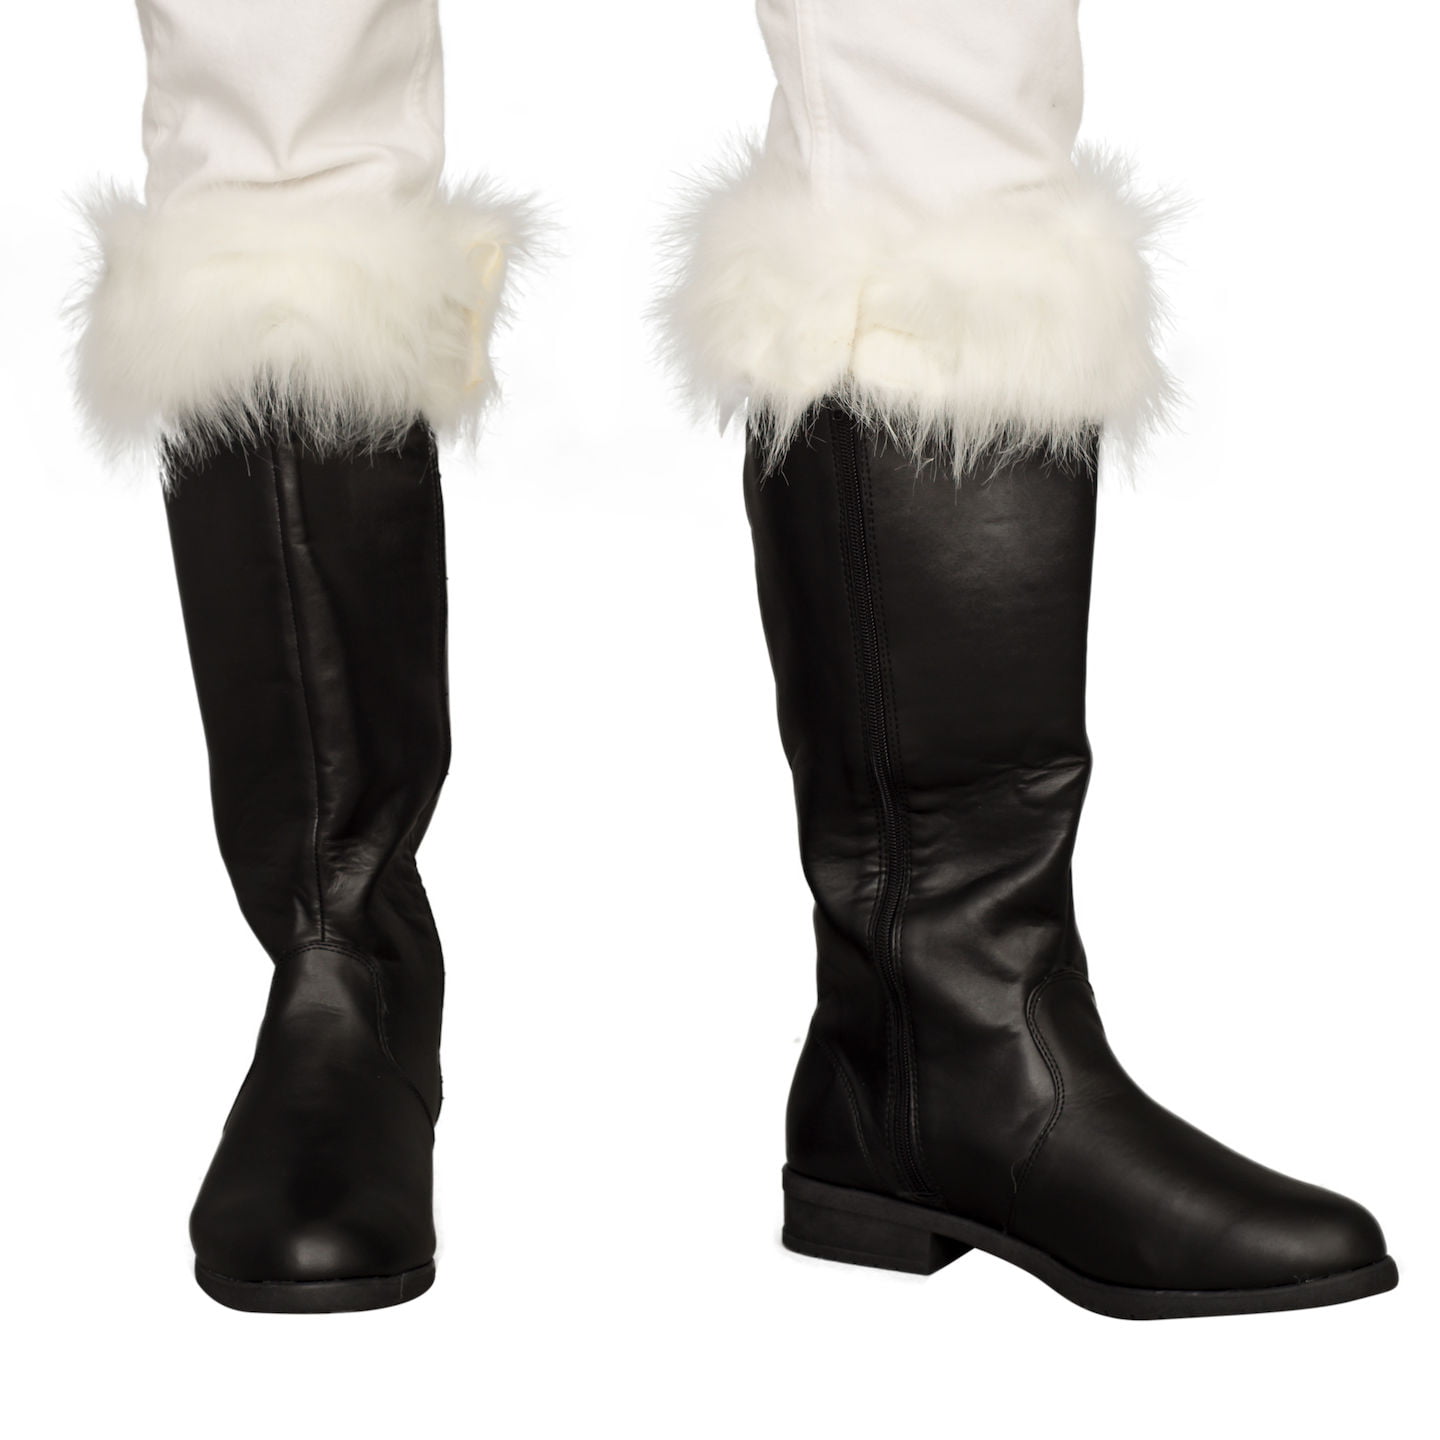 Adult Halloween Christmas Santa Claus Costume Black Boots 